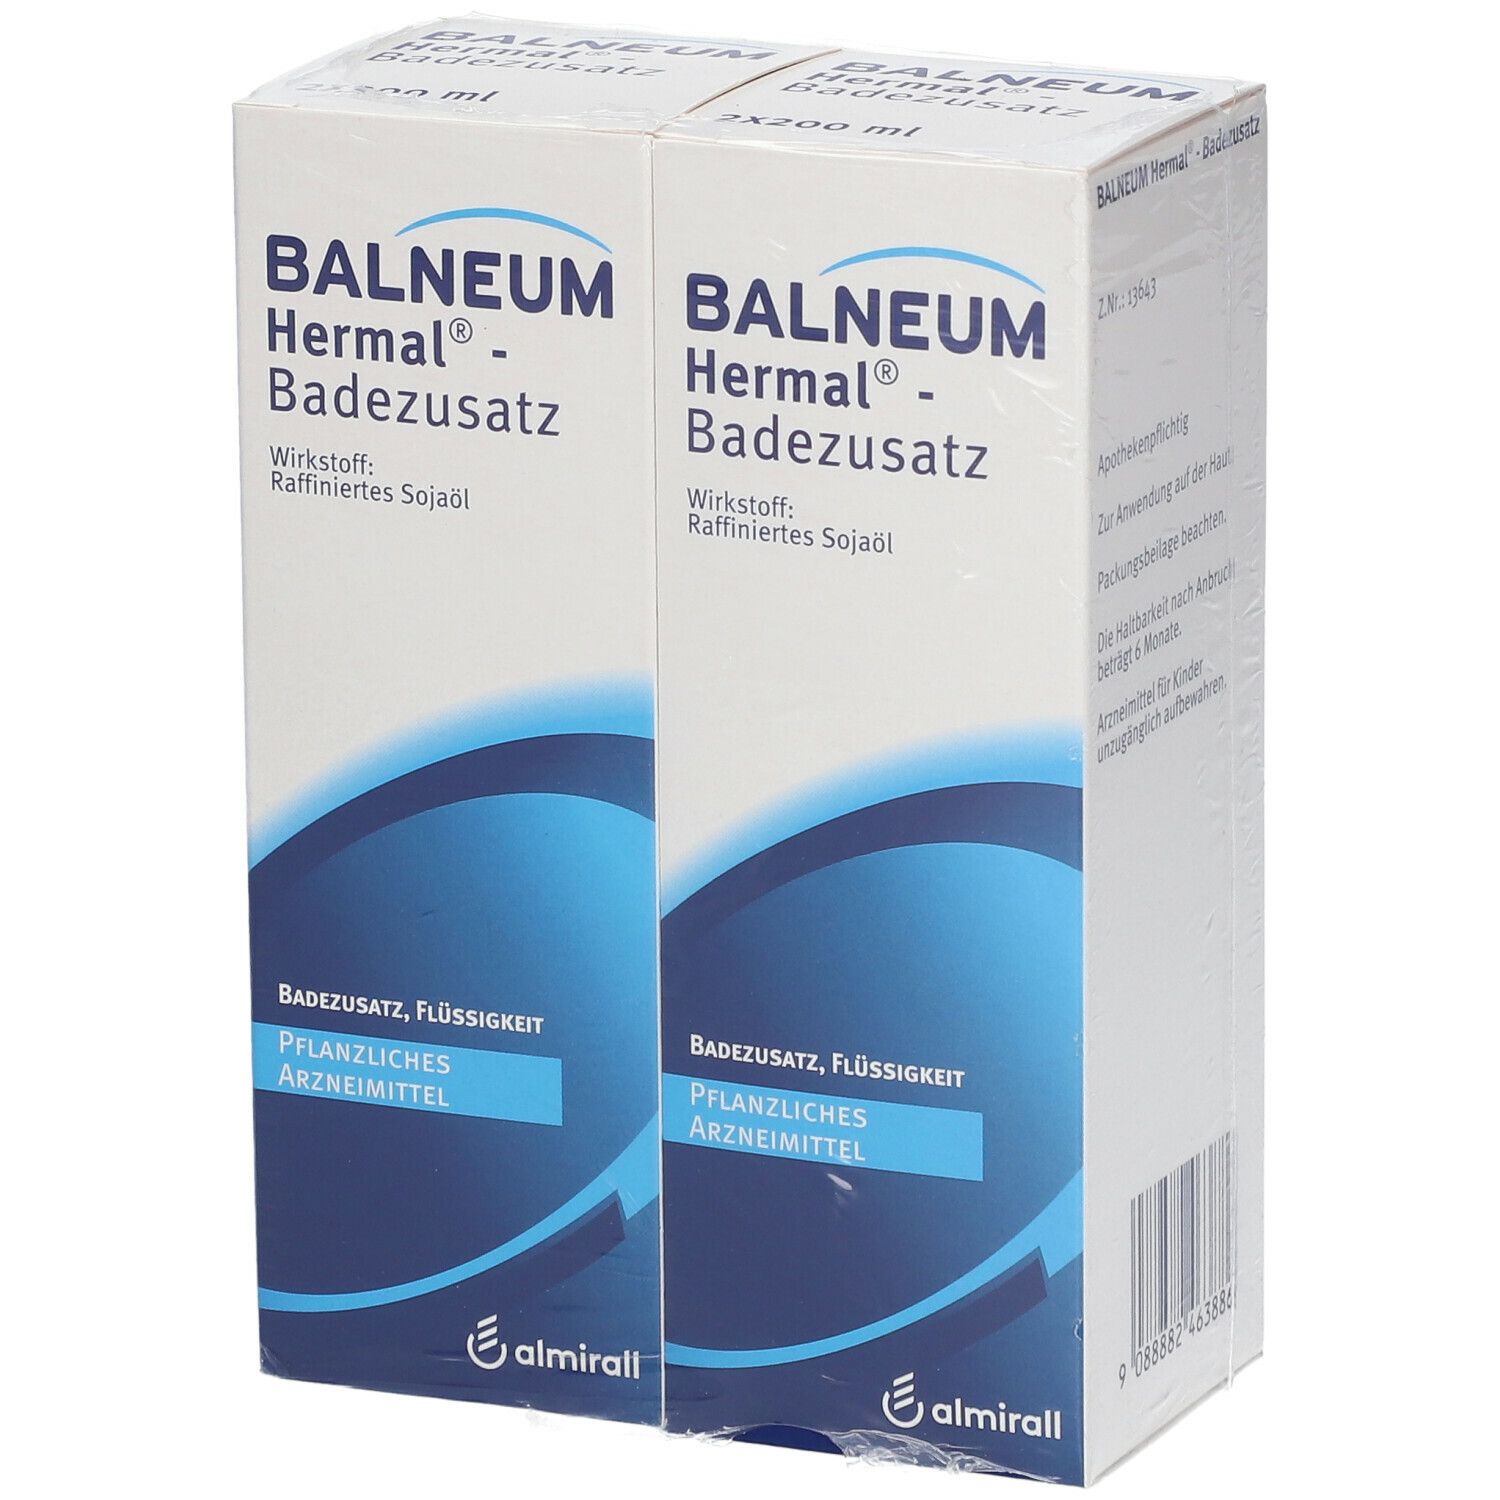 Balneum Hermal®-Badezusatz